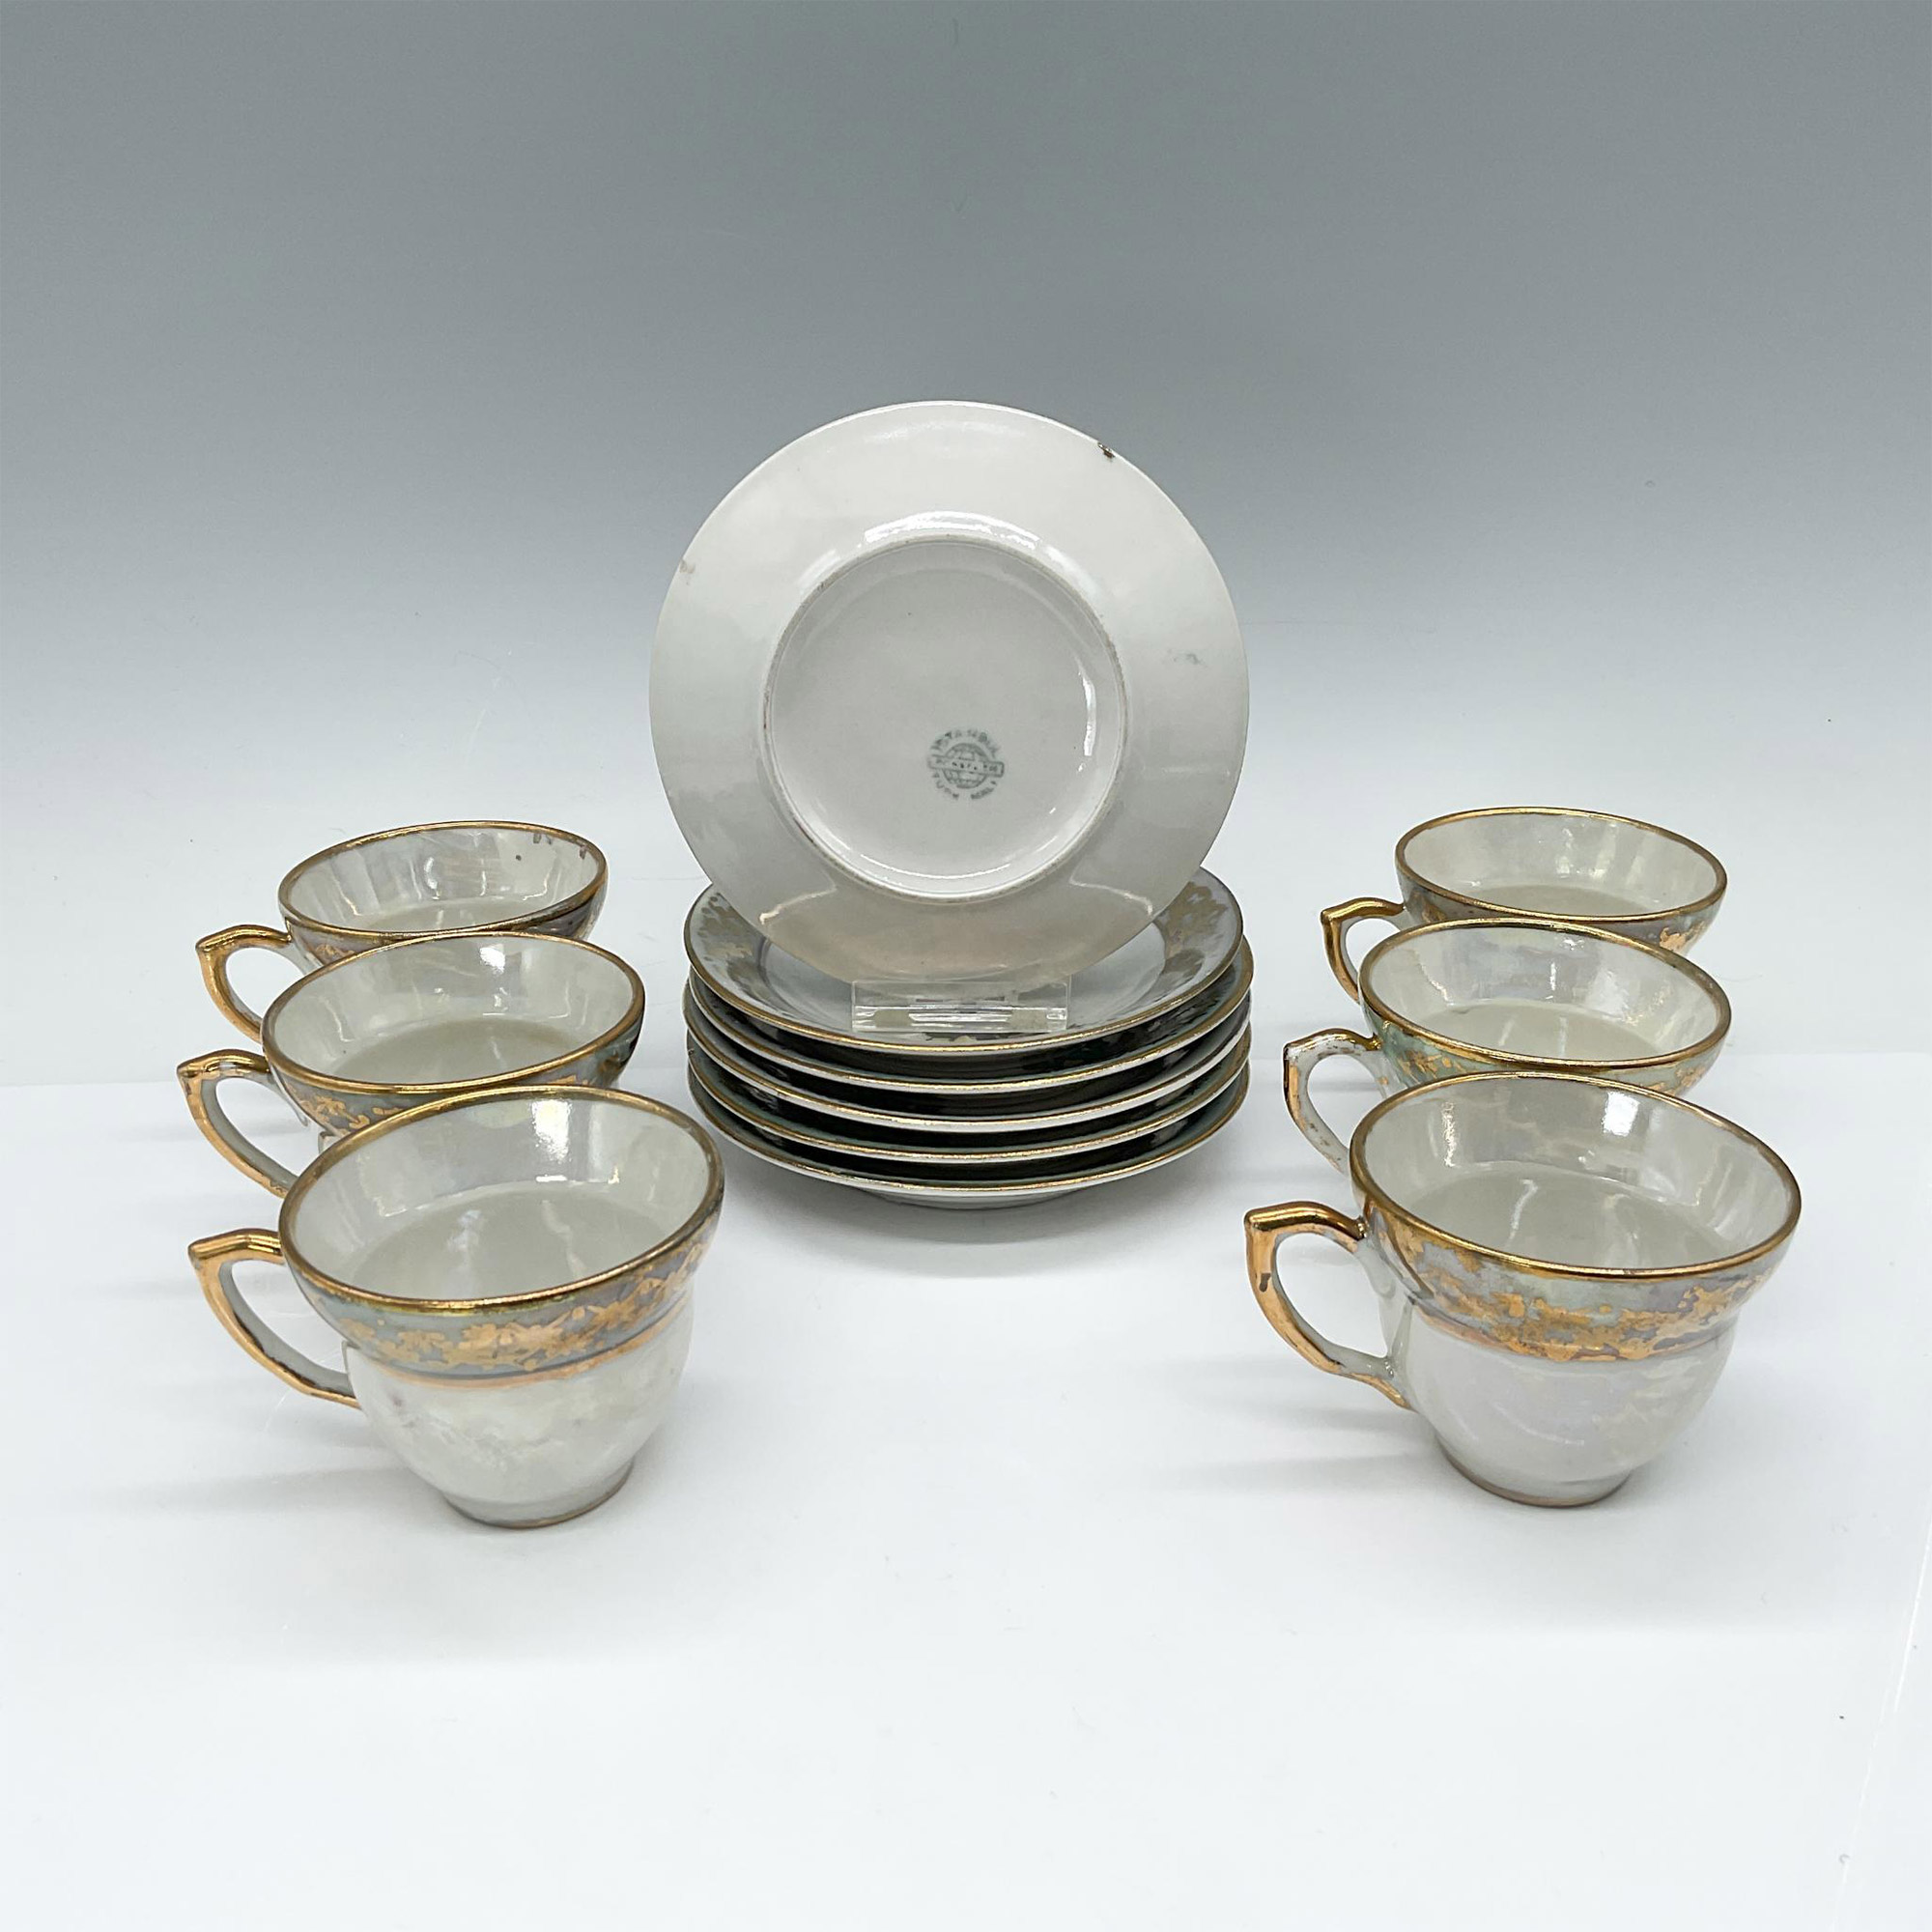 12pc Vintage Istanbul Porselen Teacups & Saucers Set - Image 2 of 3